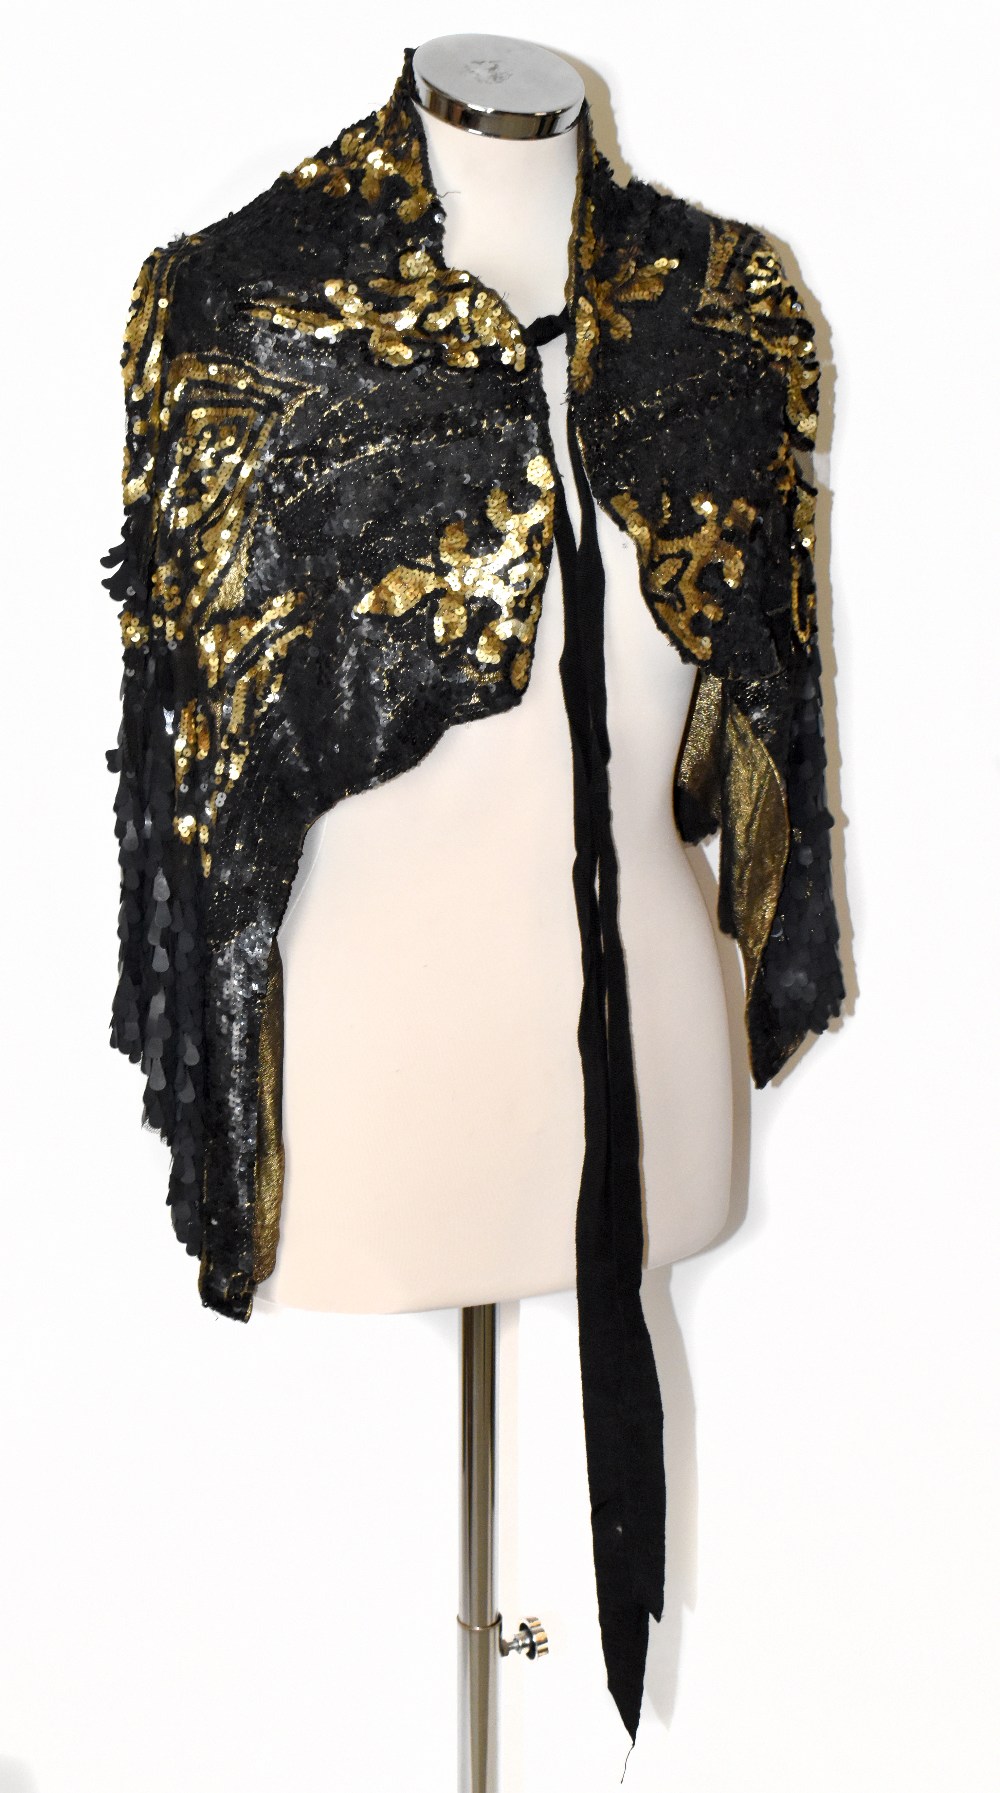 A 1930s gold metallic knit short shoulder cape covered in black lace embellished with large black